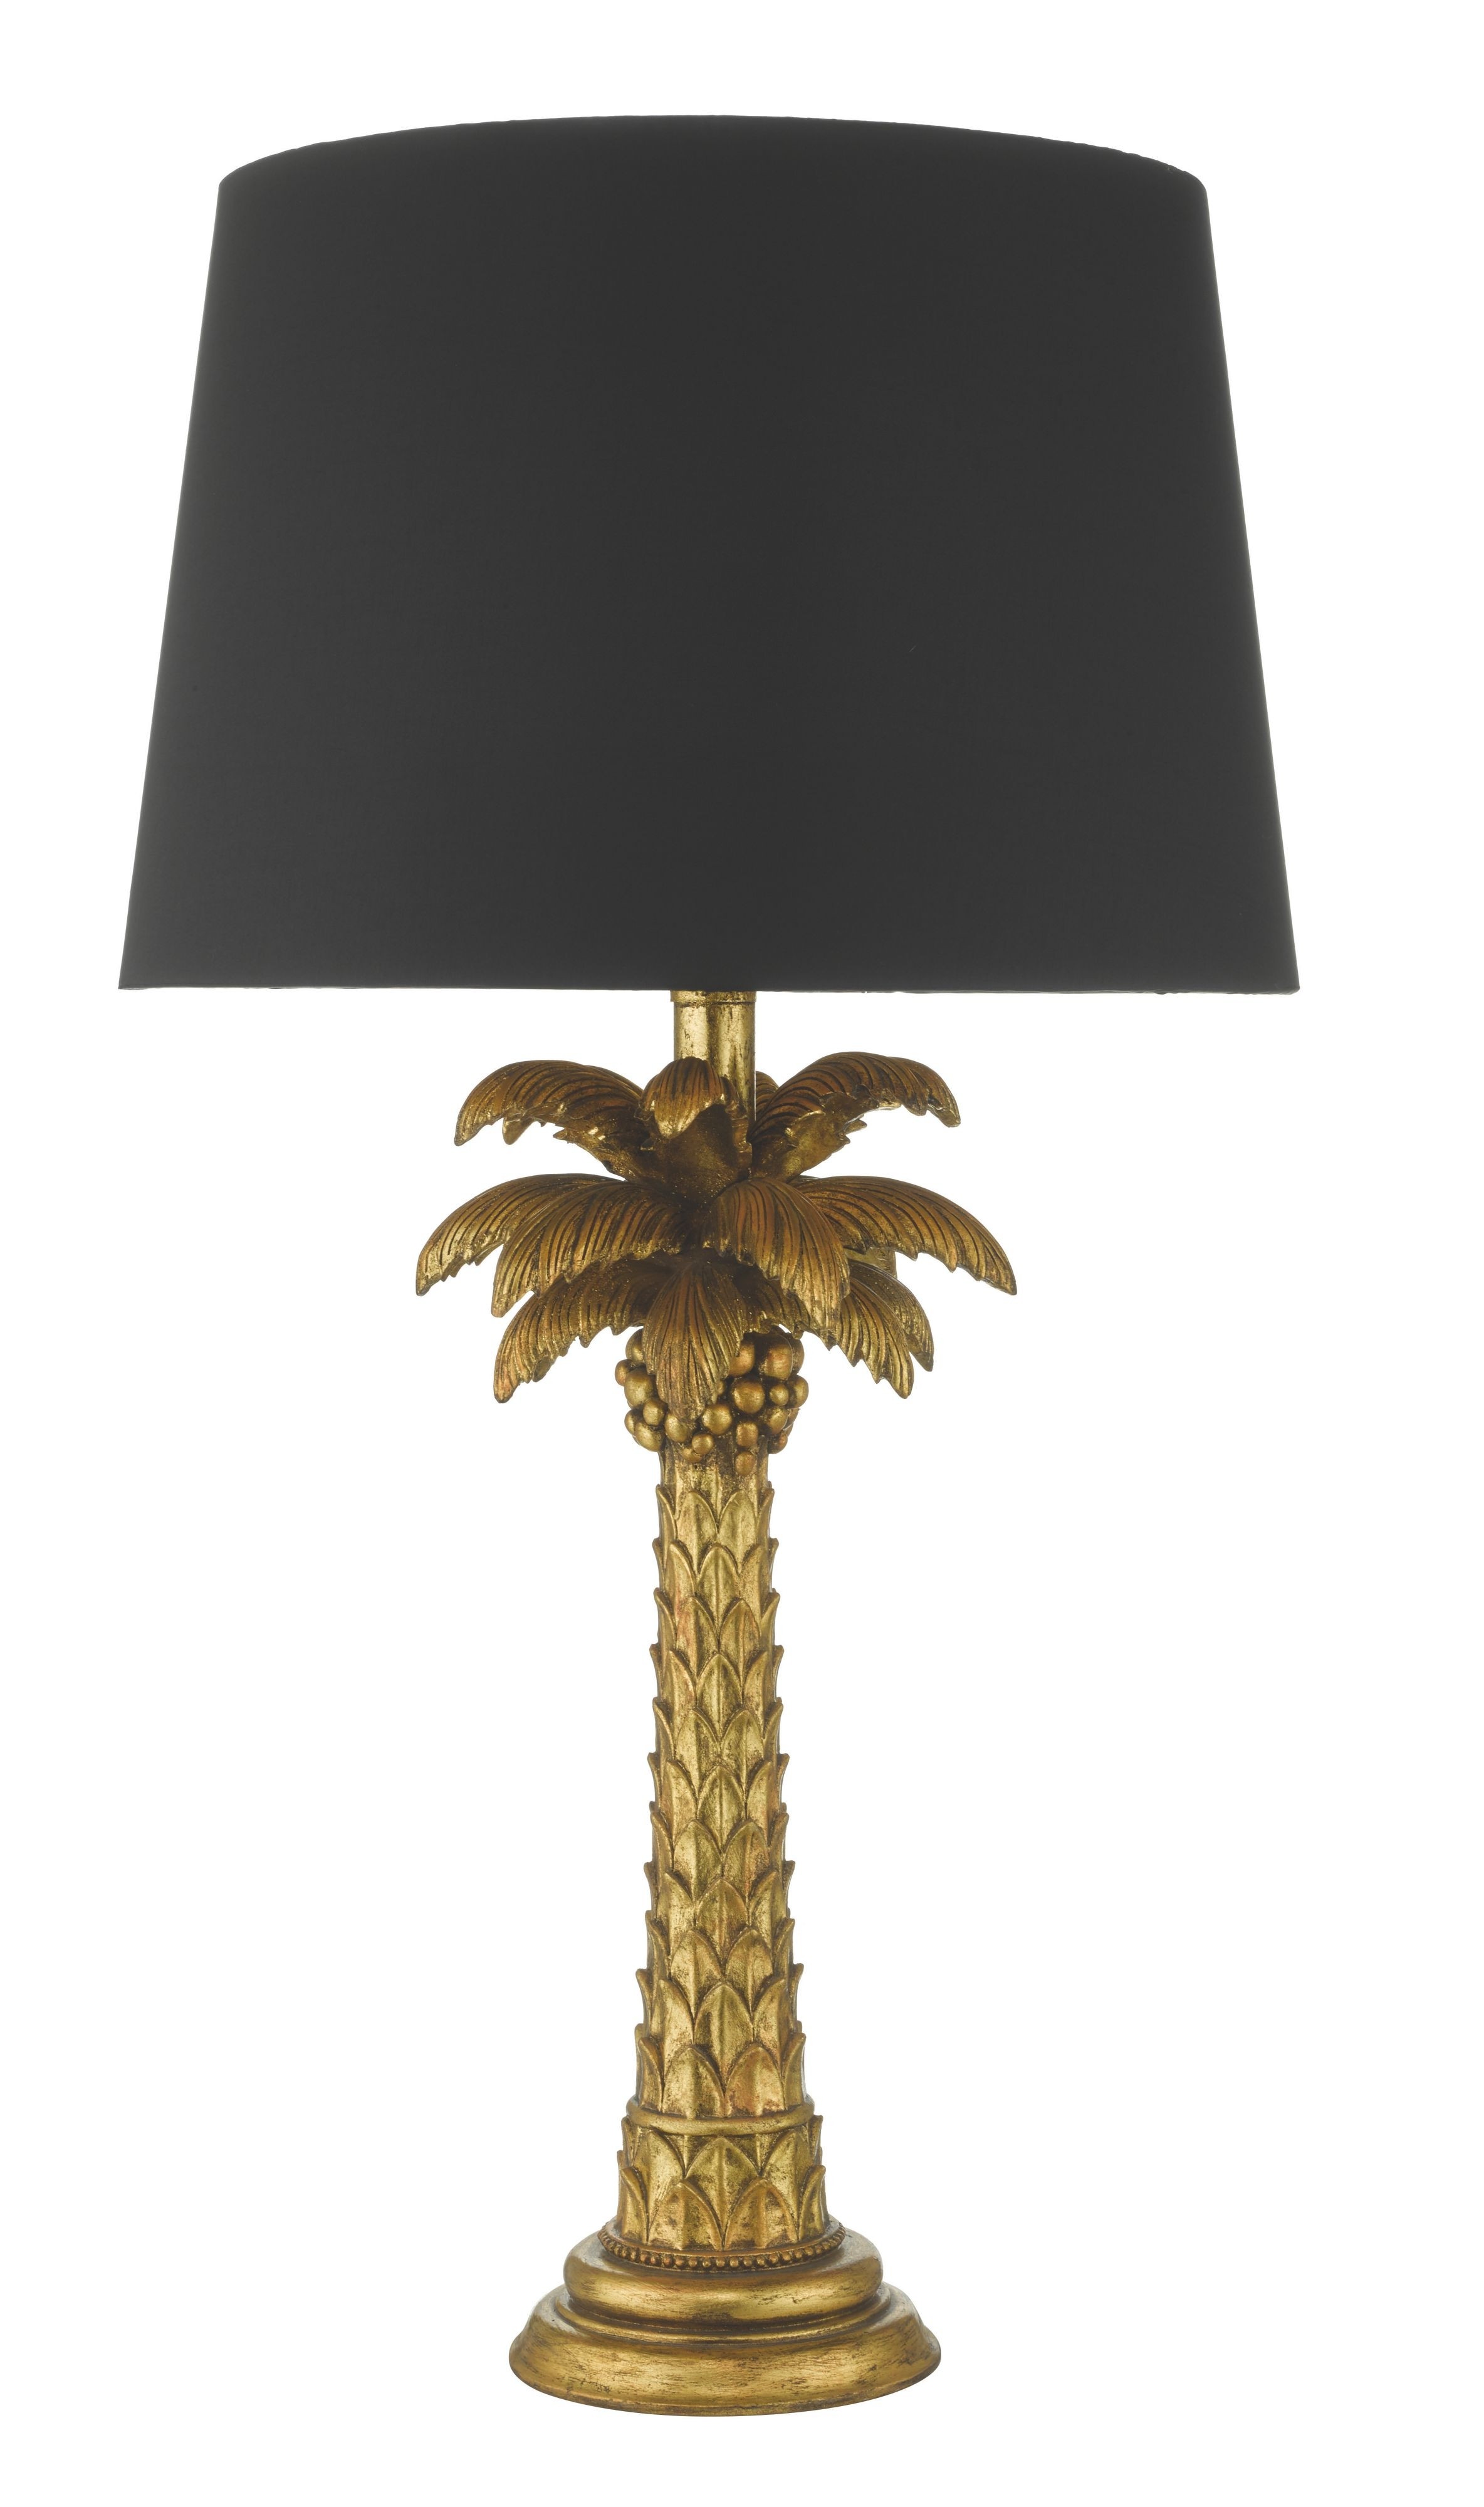 Biba paradise palm tree table lamp